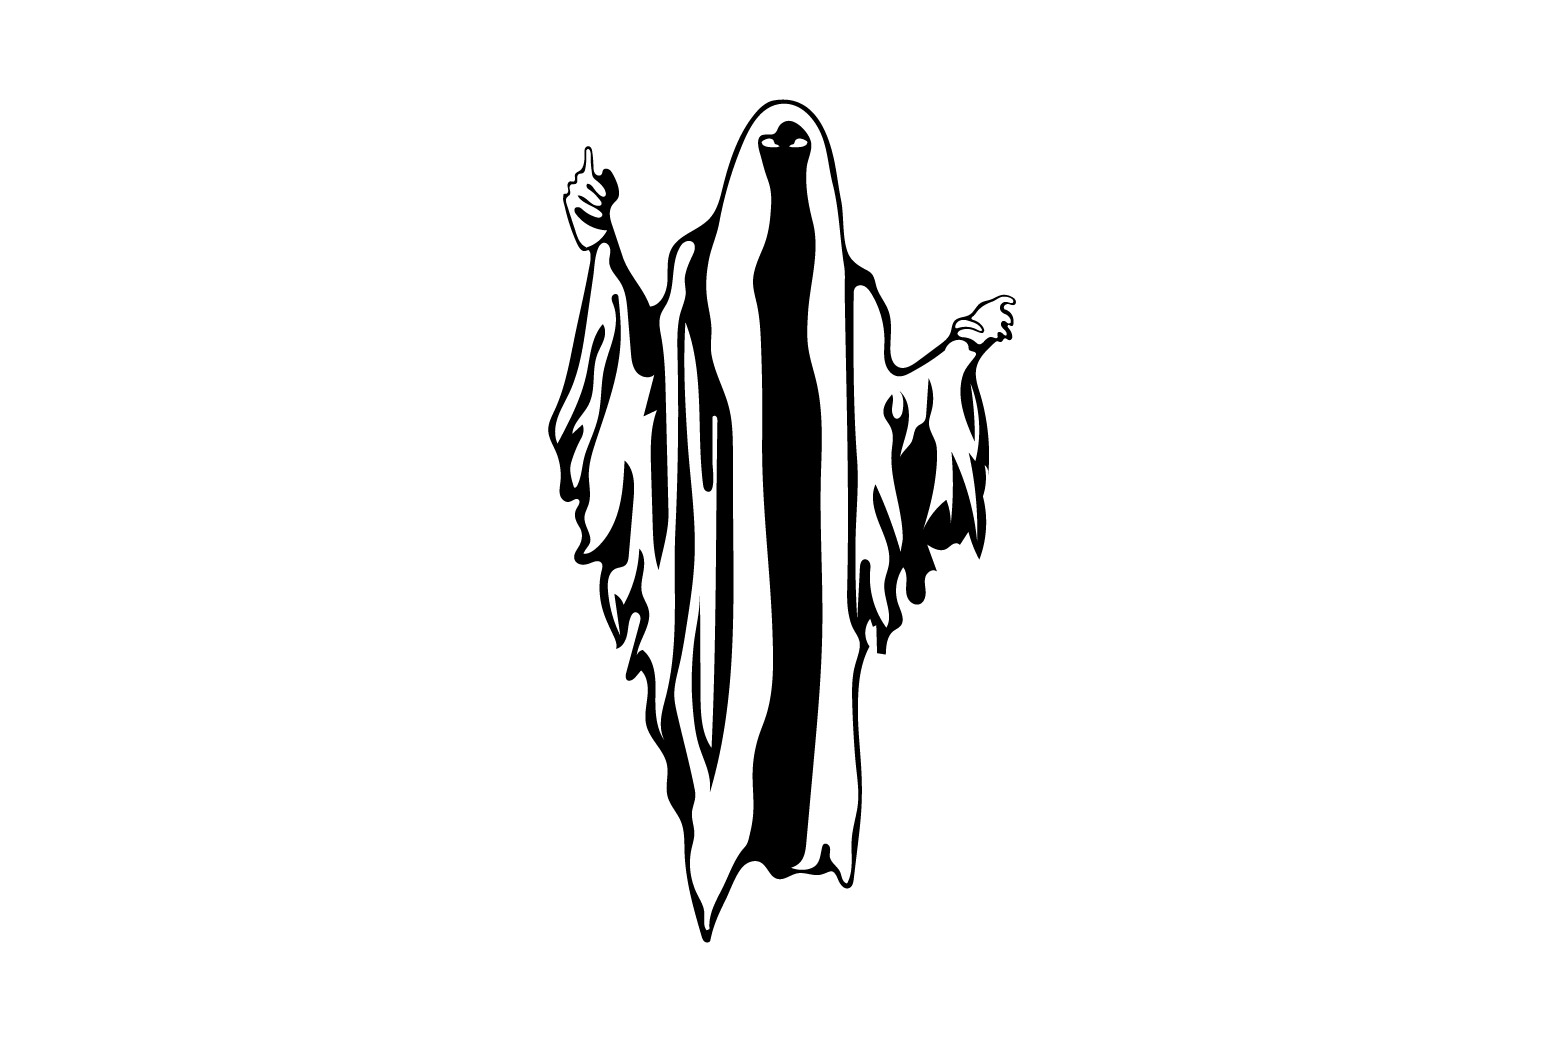 Ghost Illustration for your design.